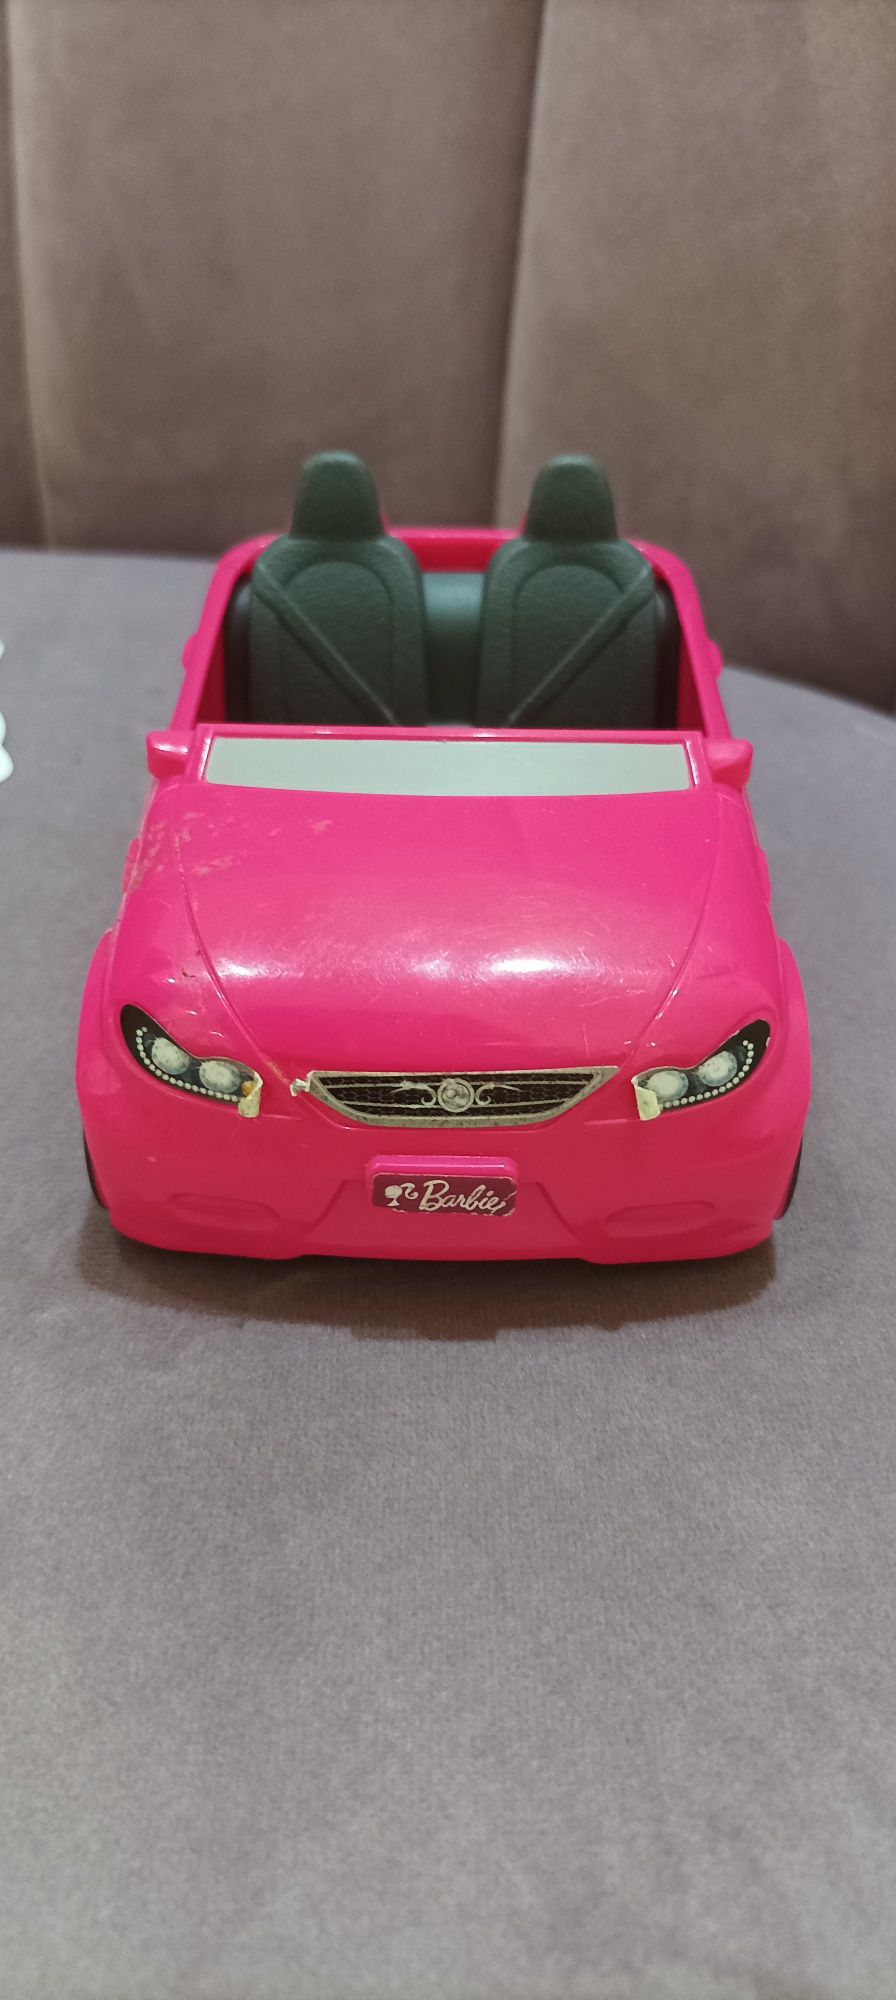 Машинка Barbe іграшка барбі з Магдоналдса